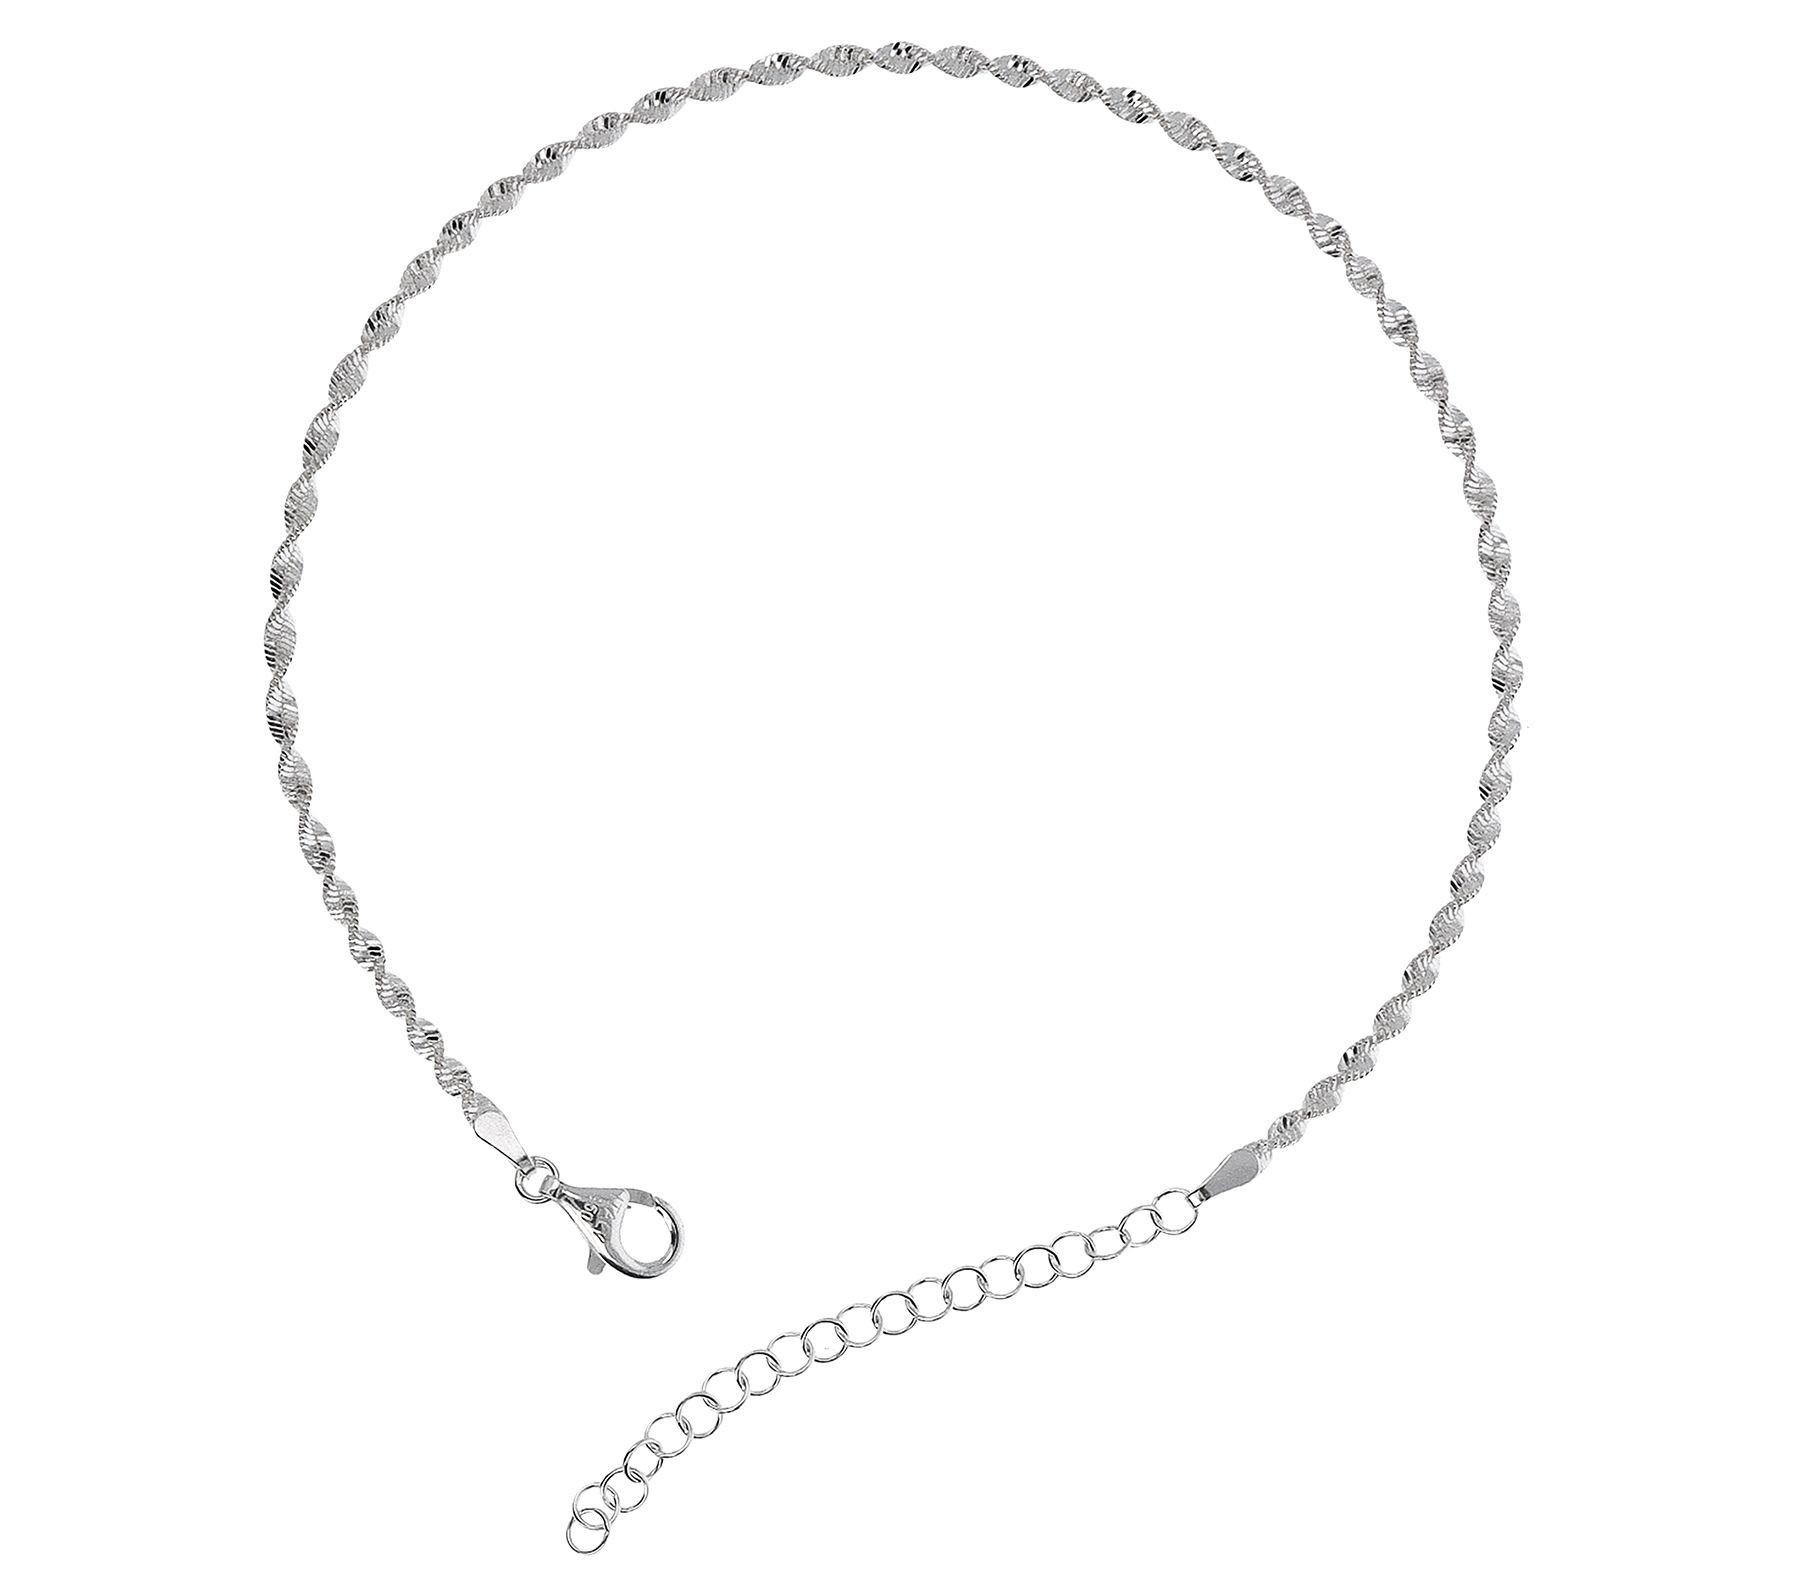 UltraFine Silver Twisted Herringbone Ankle Bracelet 2.8g - QVC.com